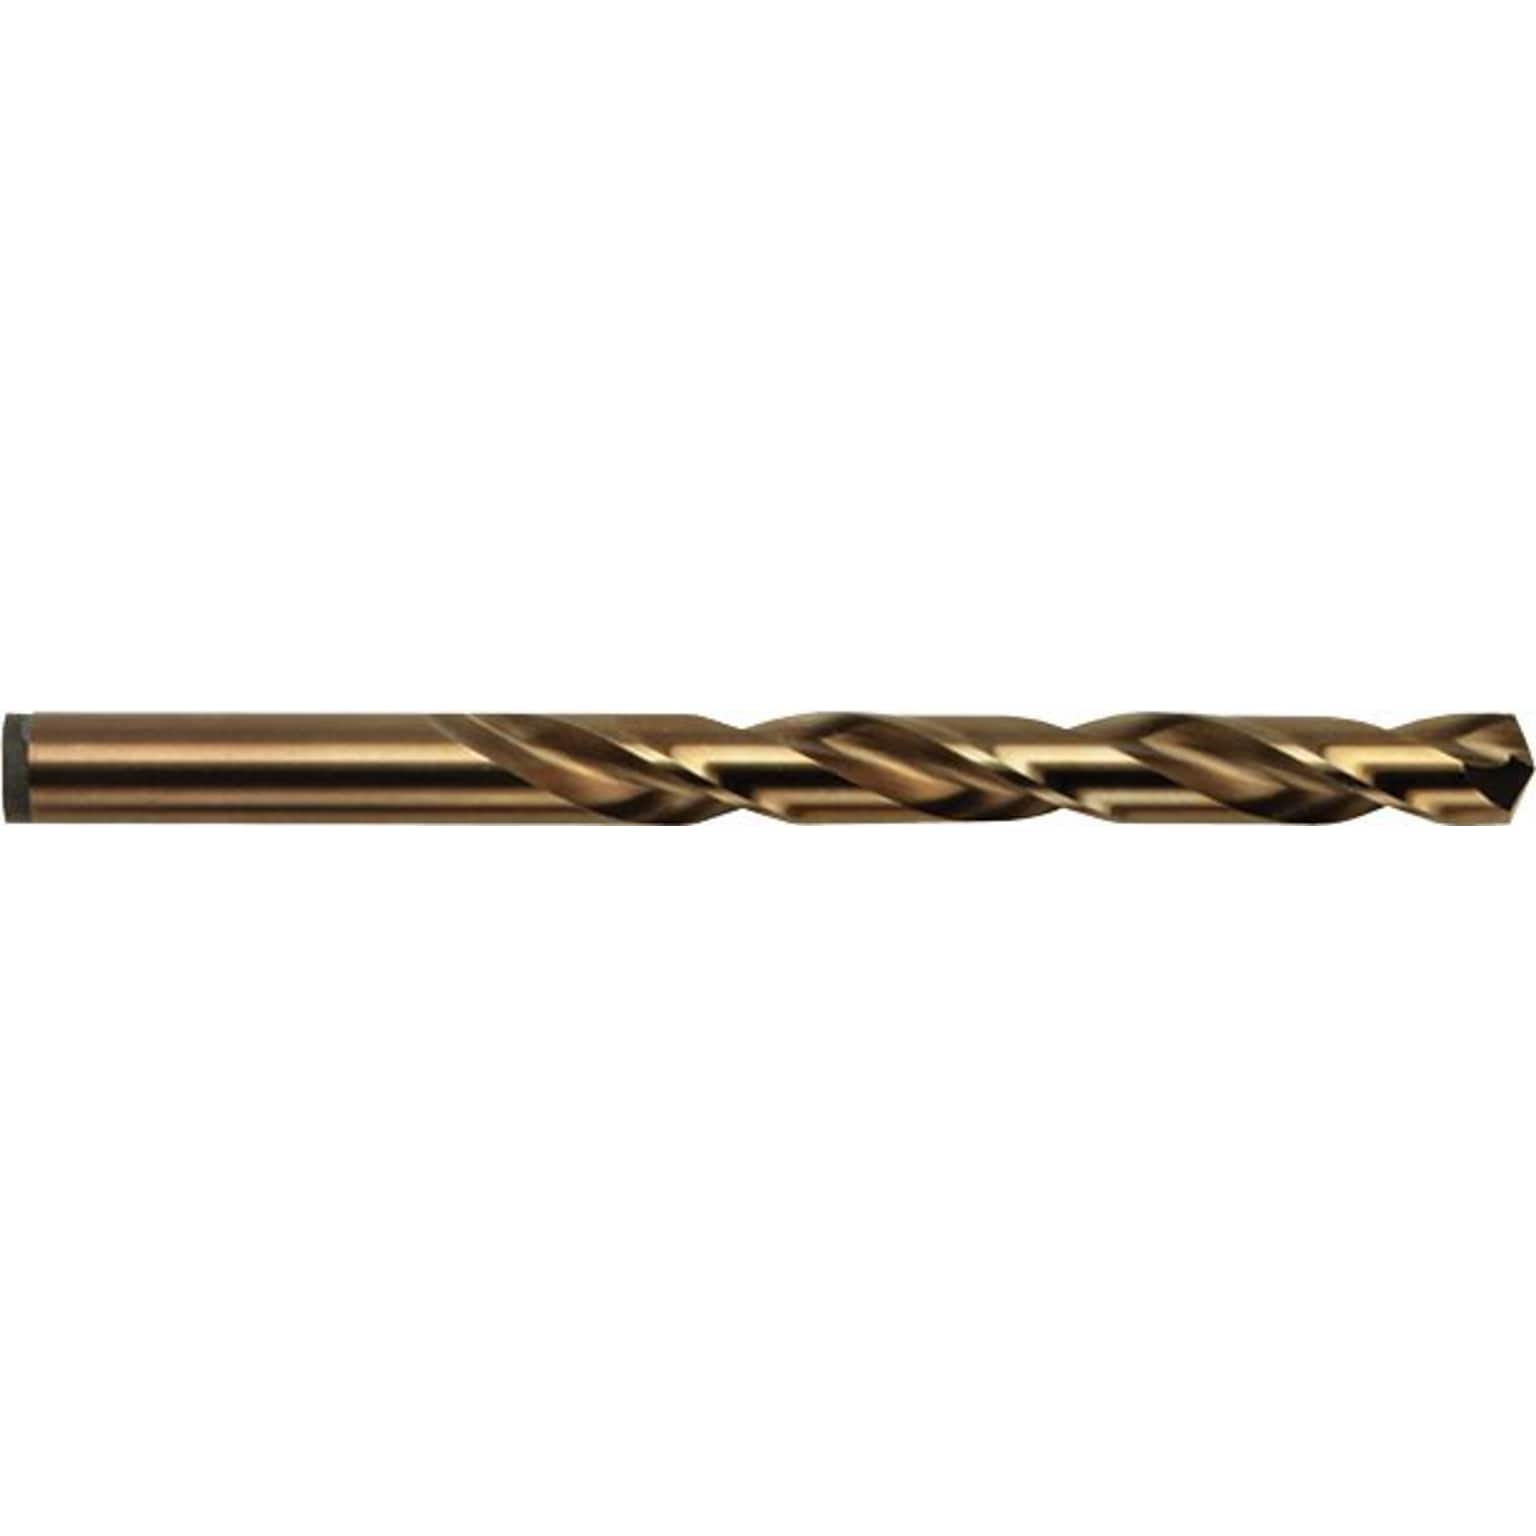 Irwin® Cobalt High Speed Steel Drill Bits, 3/8